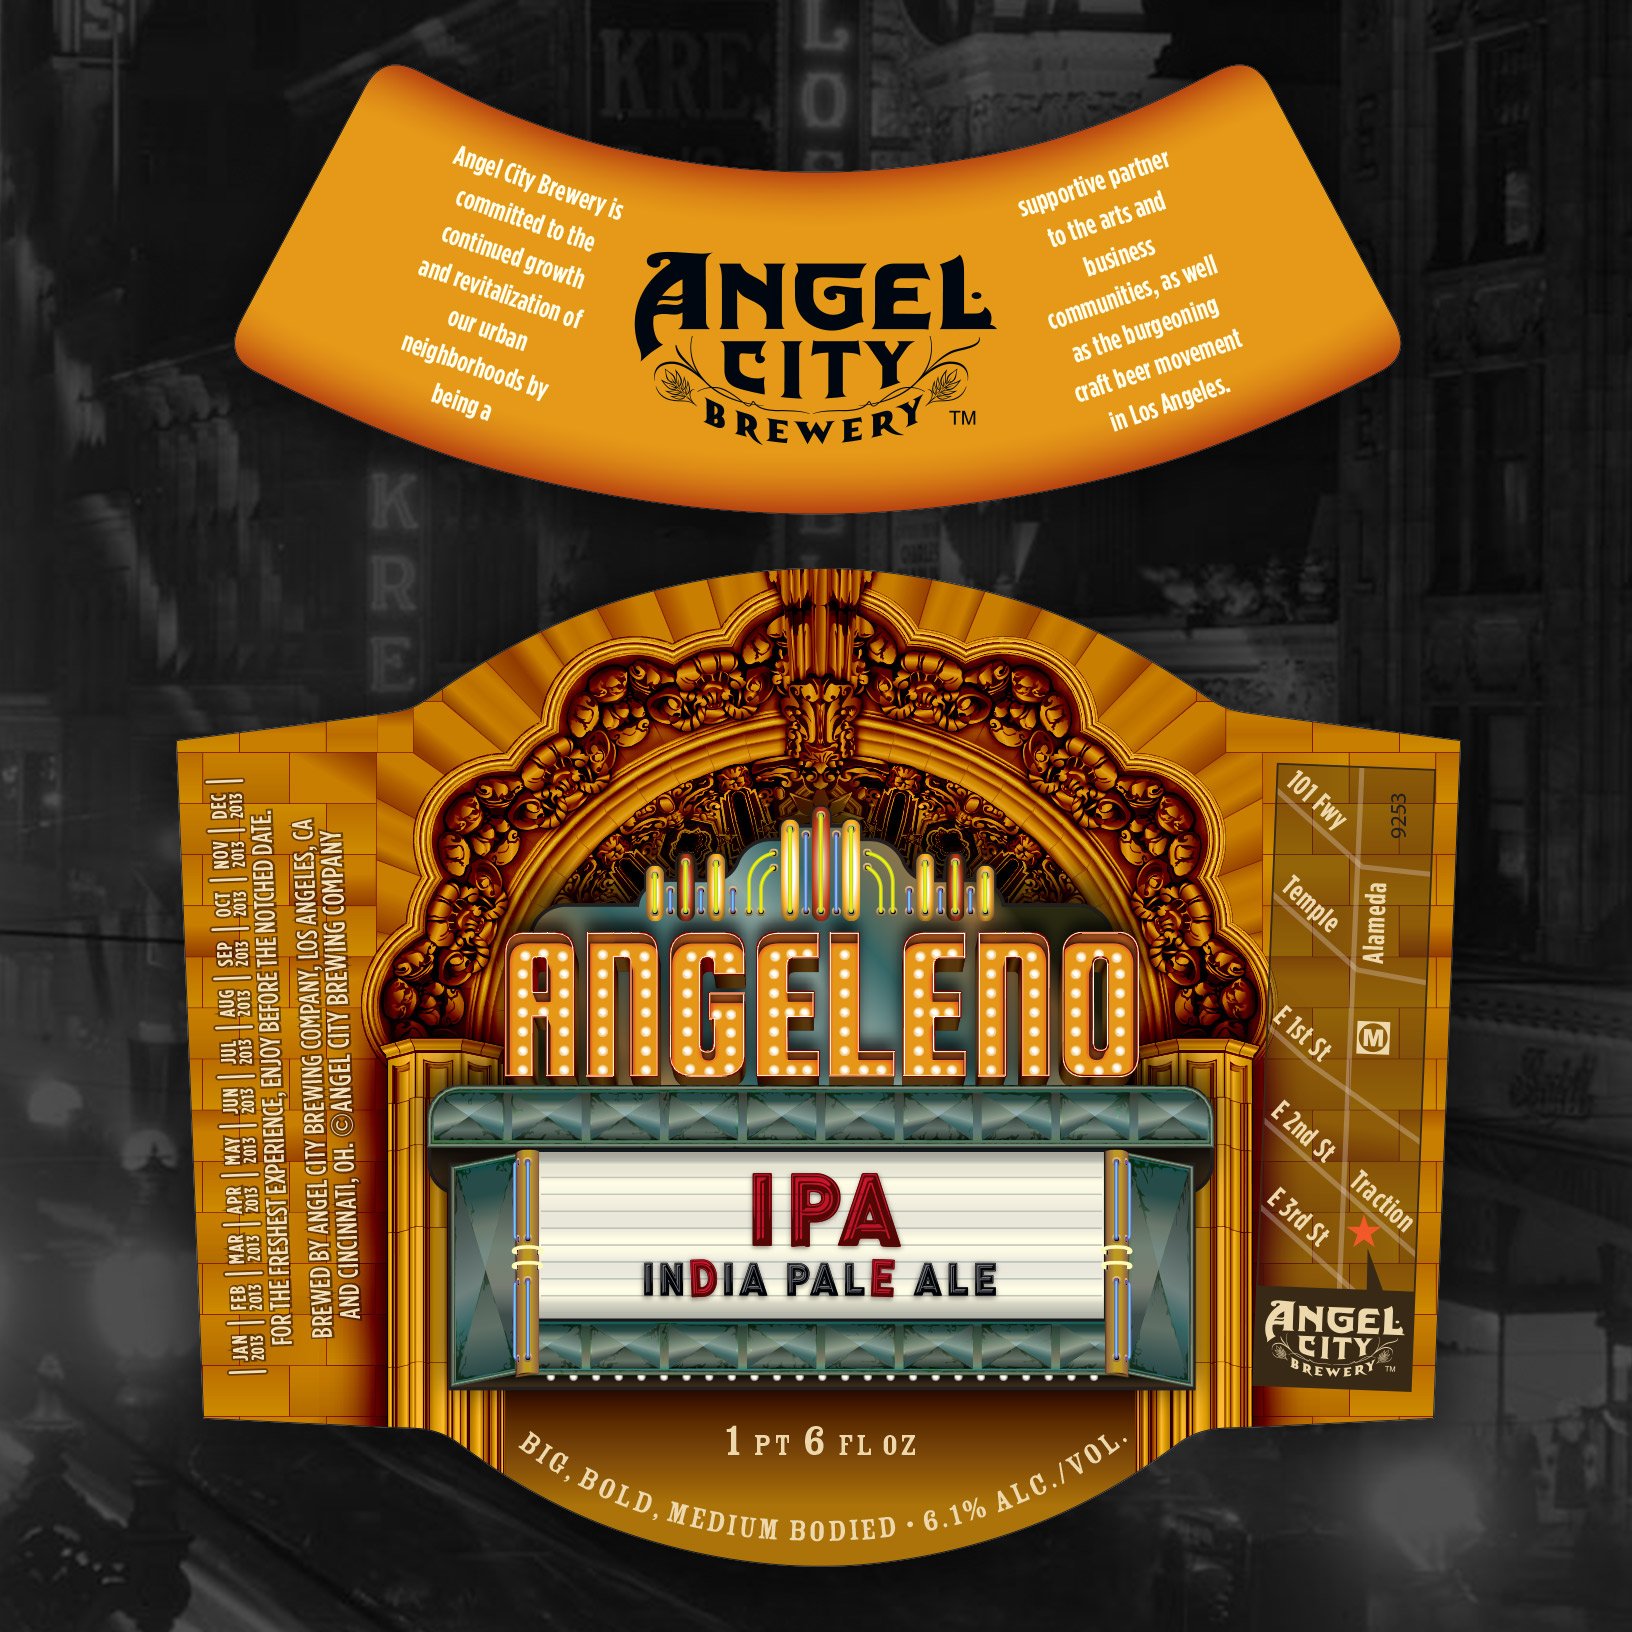 Angel City Brewery Angeleno IPA beer labels